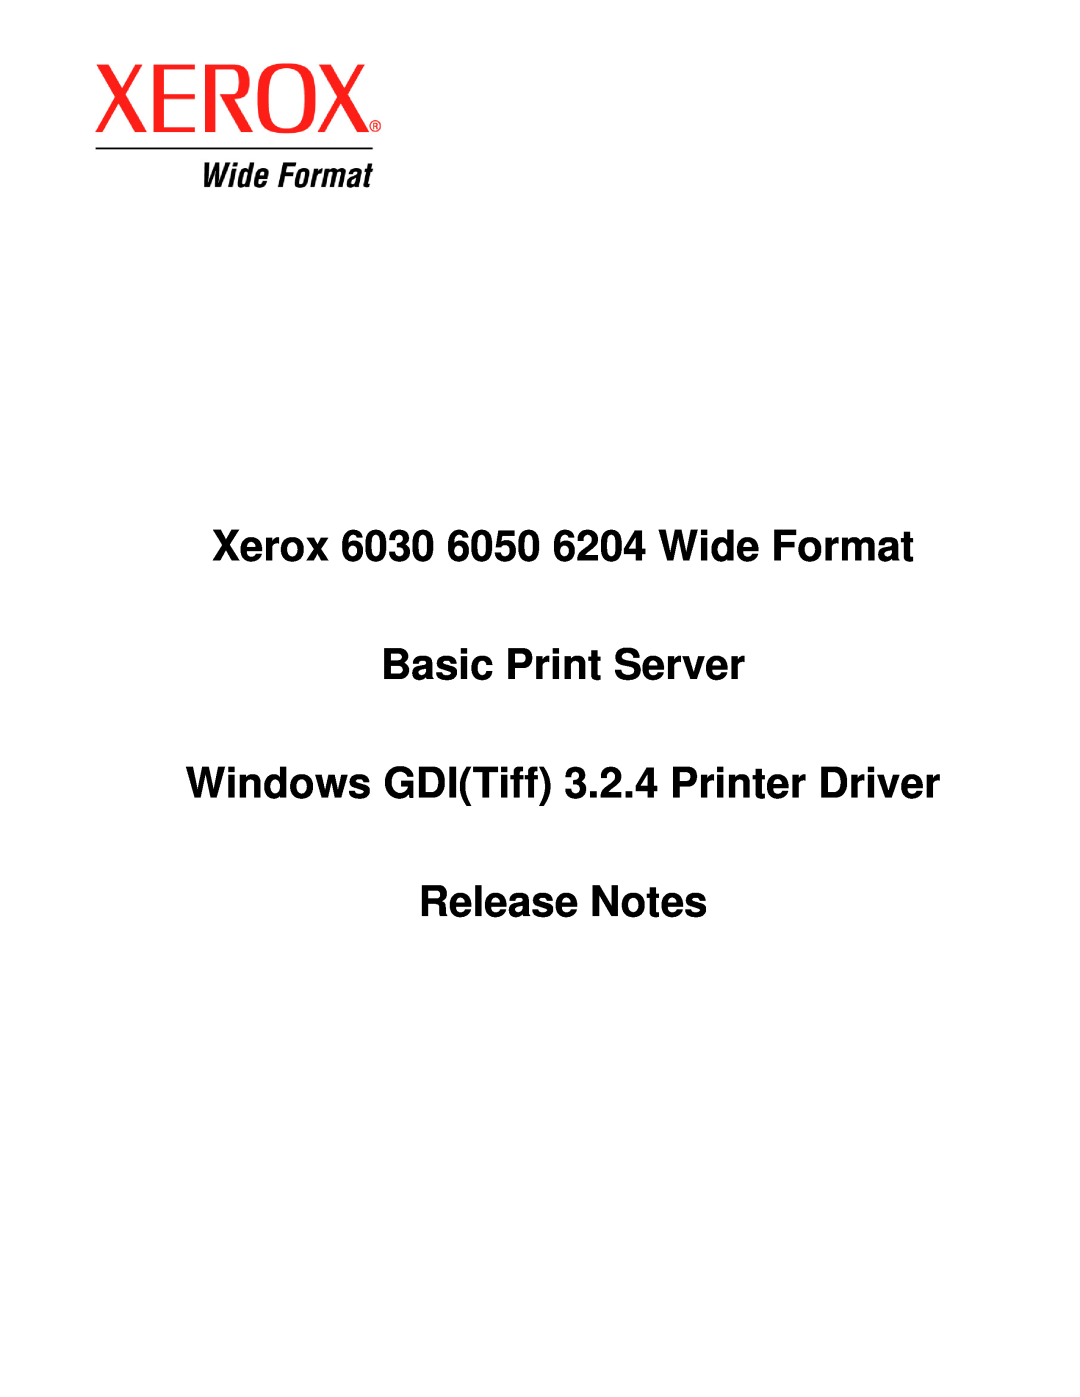 Xerox manual Xerox 6030 6050 6204 Wide Format, Basic Print Server, Windows GDITiff 3.2.4 Printer Driver, Release Notes 